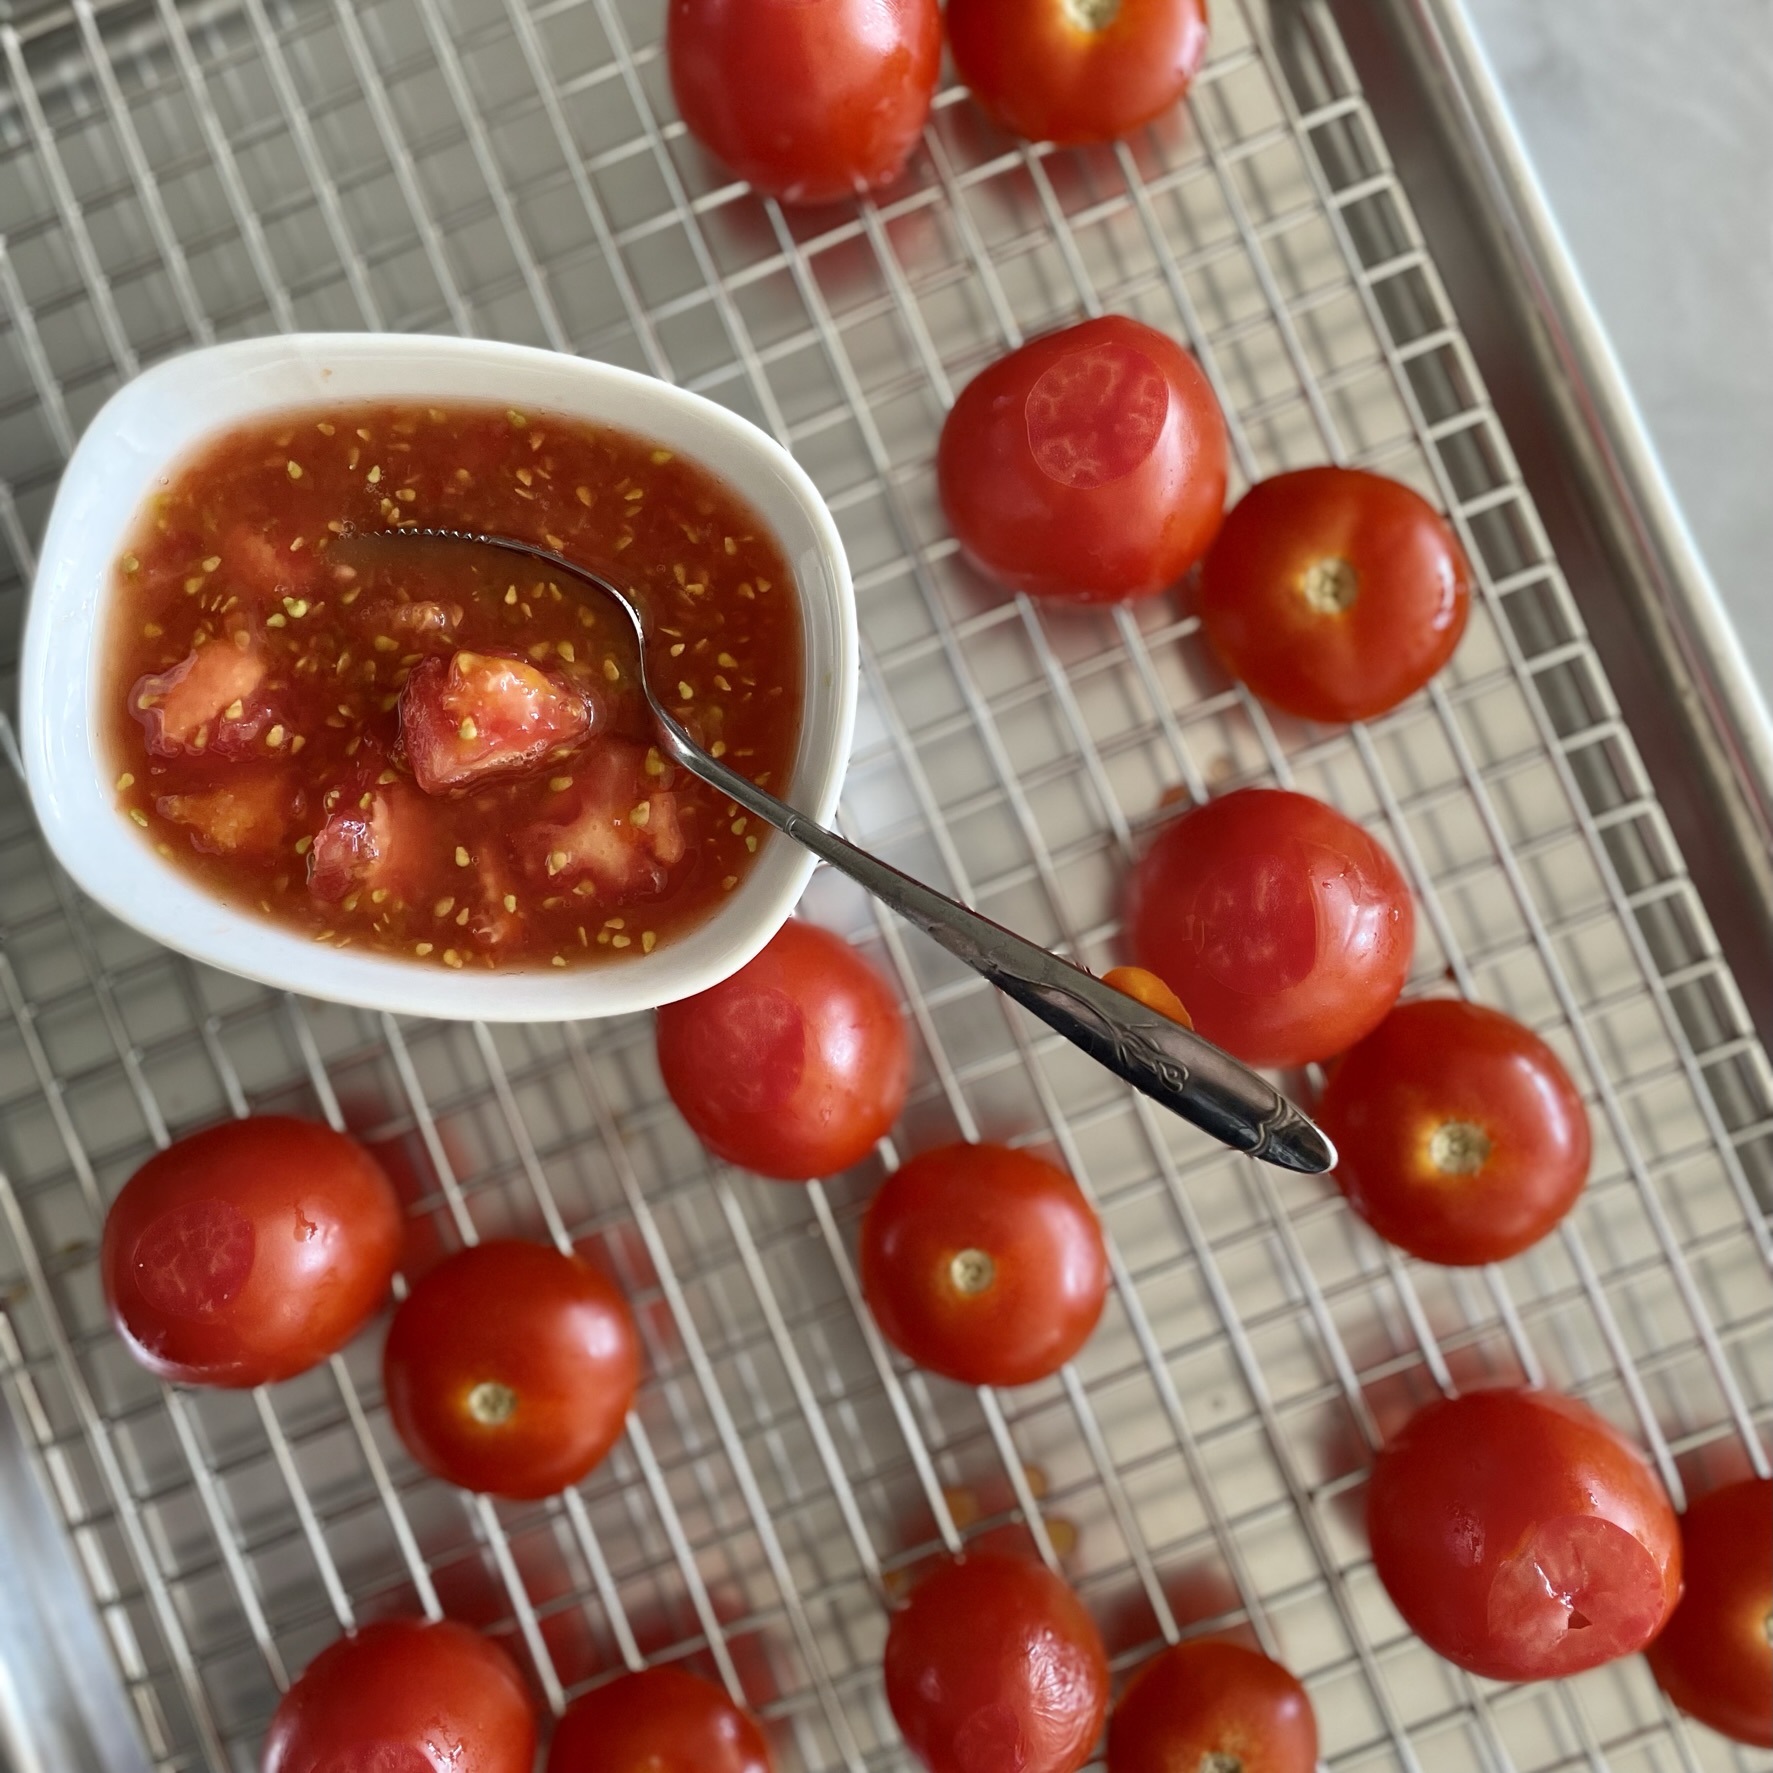 Salad-Stuffed Campari Tomatoes with scooped tomato pulp